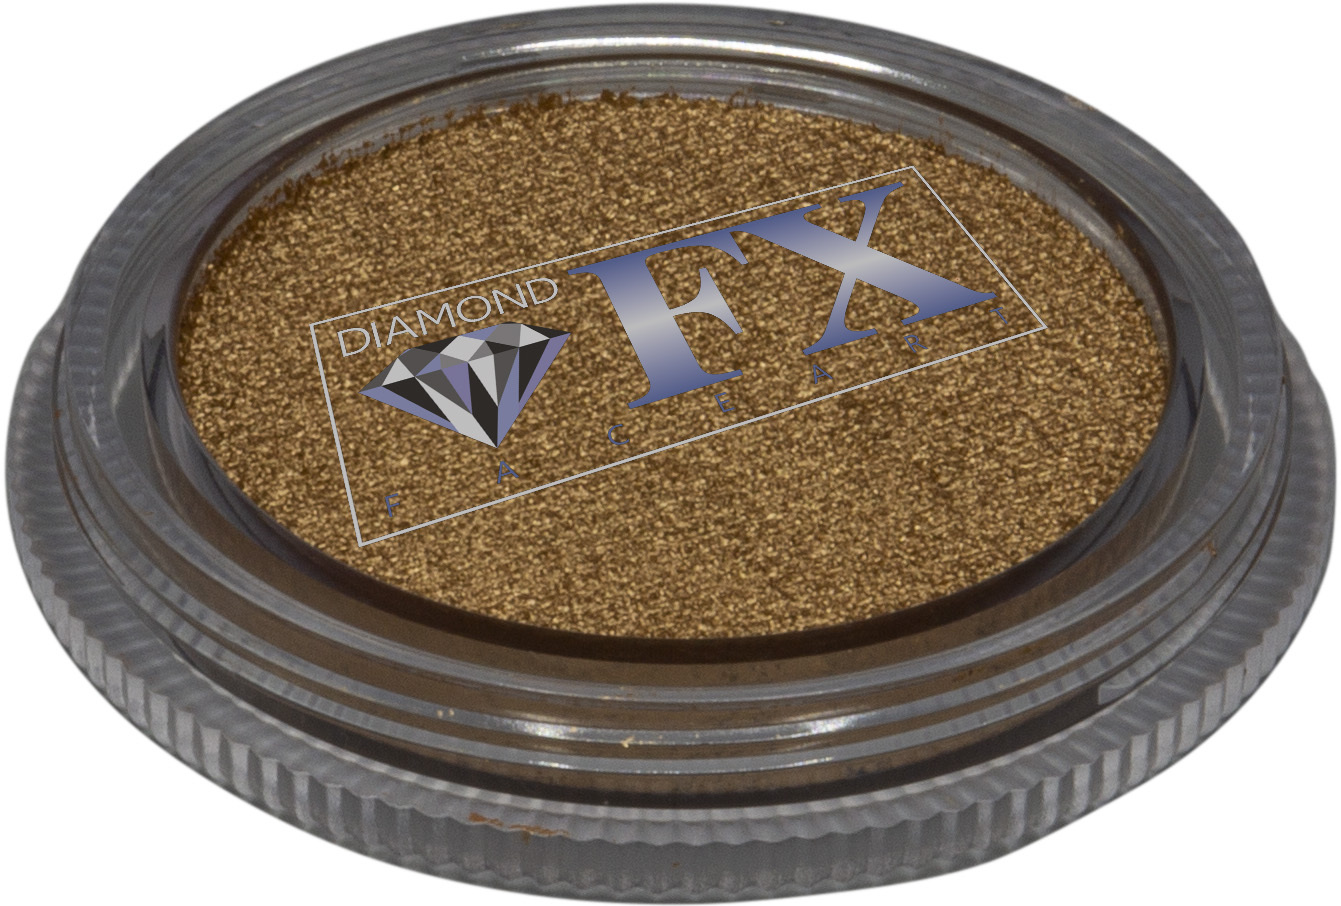 Diamond FX Old Gold 30g - Small Image